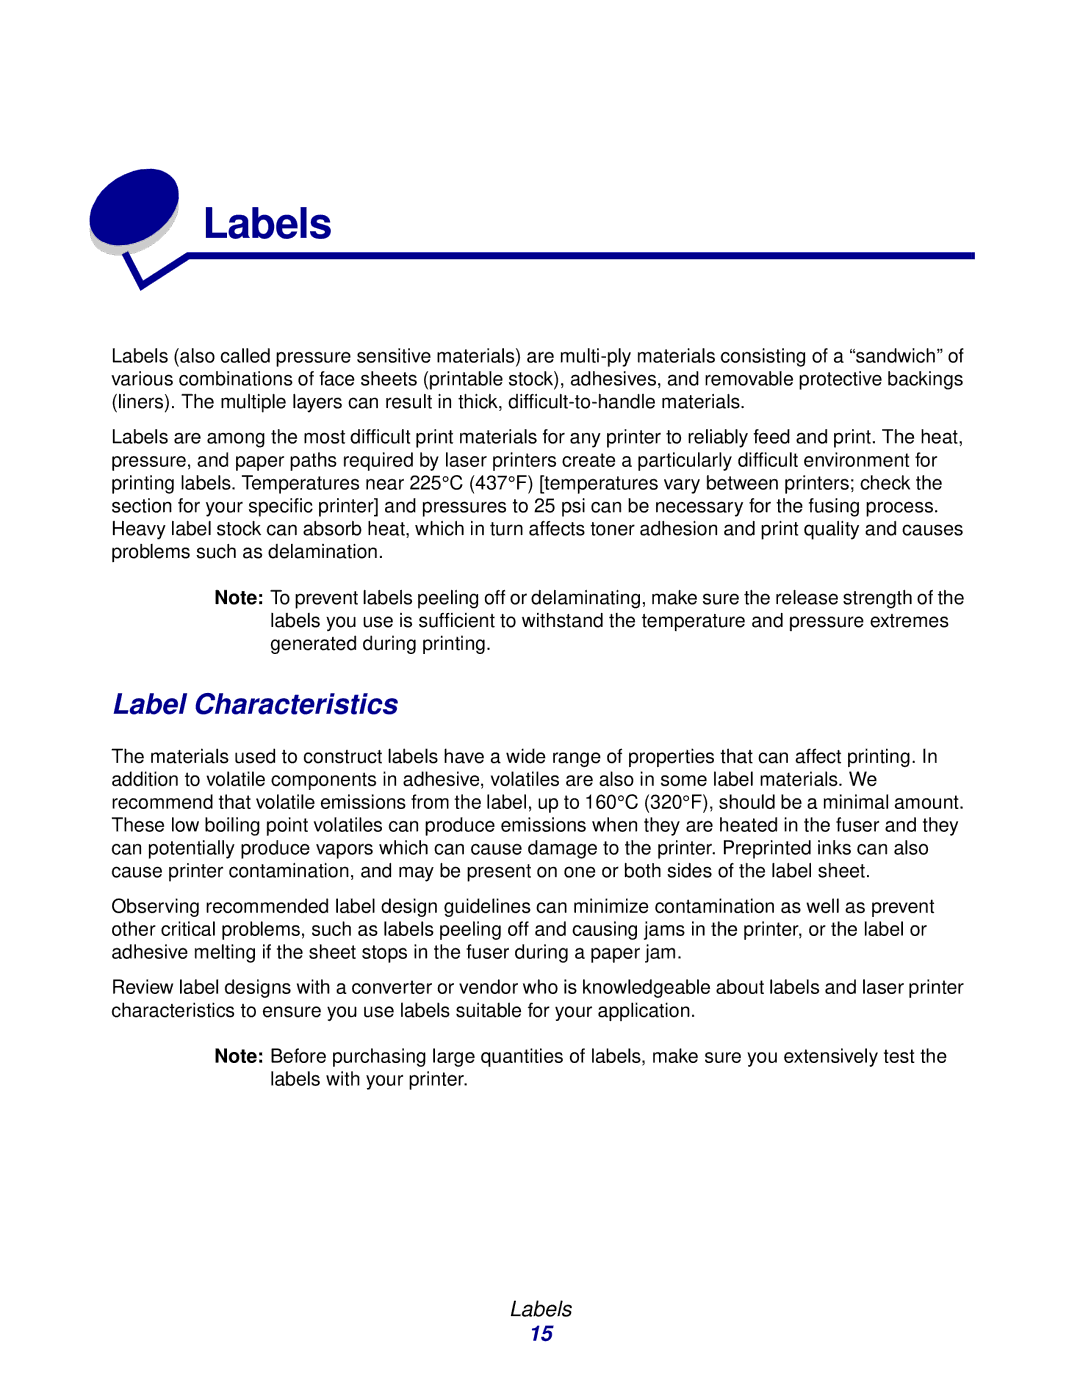 Lexmark Laser Printers manual Label Characteristics, Labels 